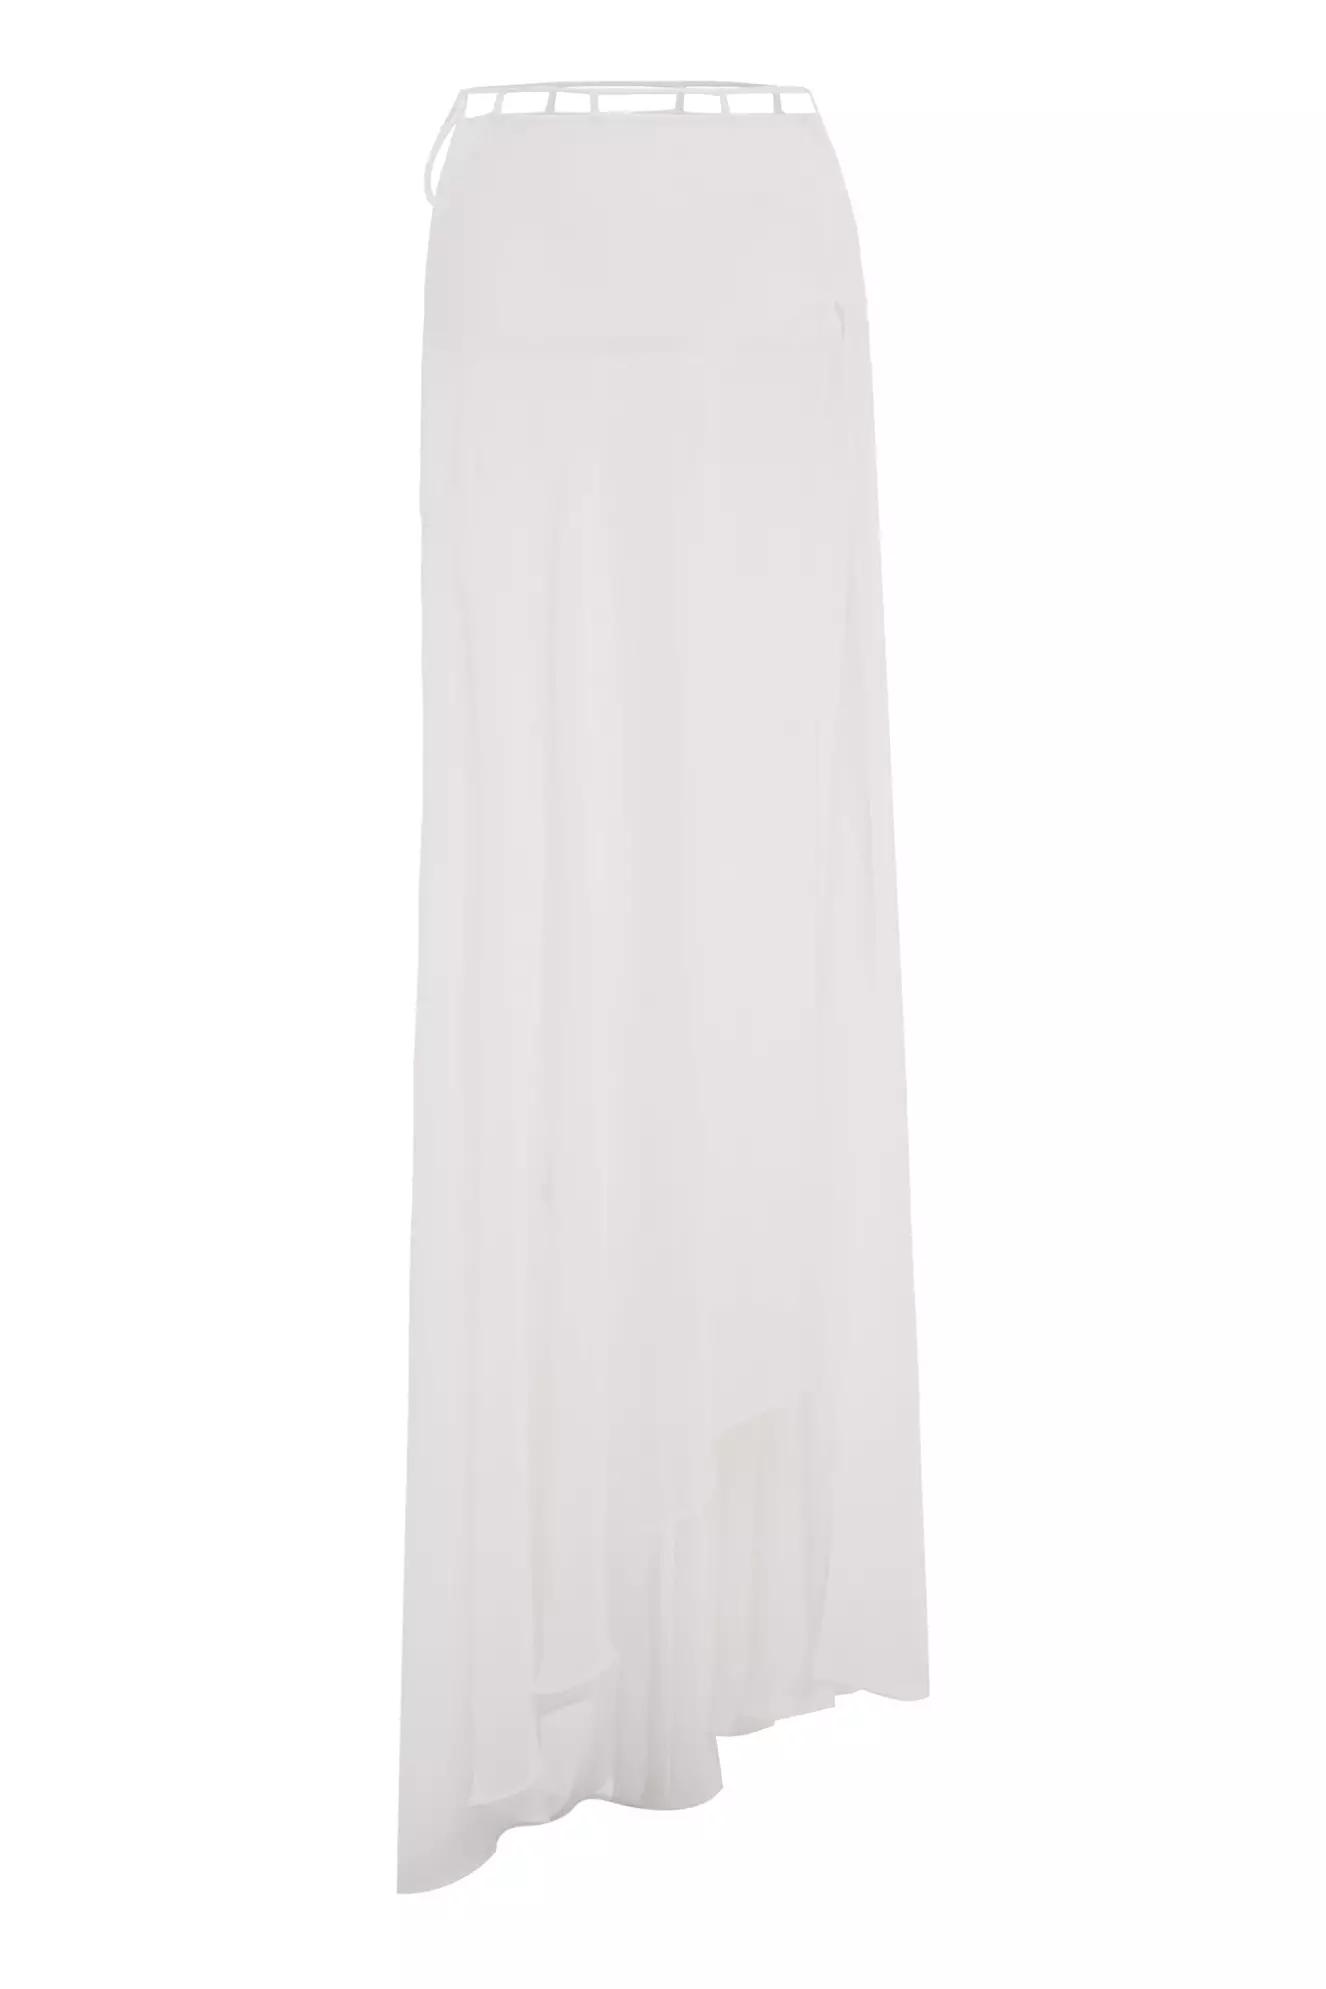 White sifon long skirt